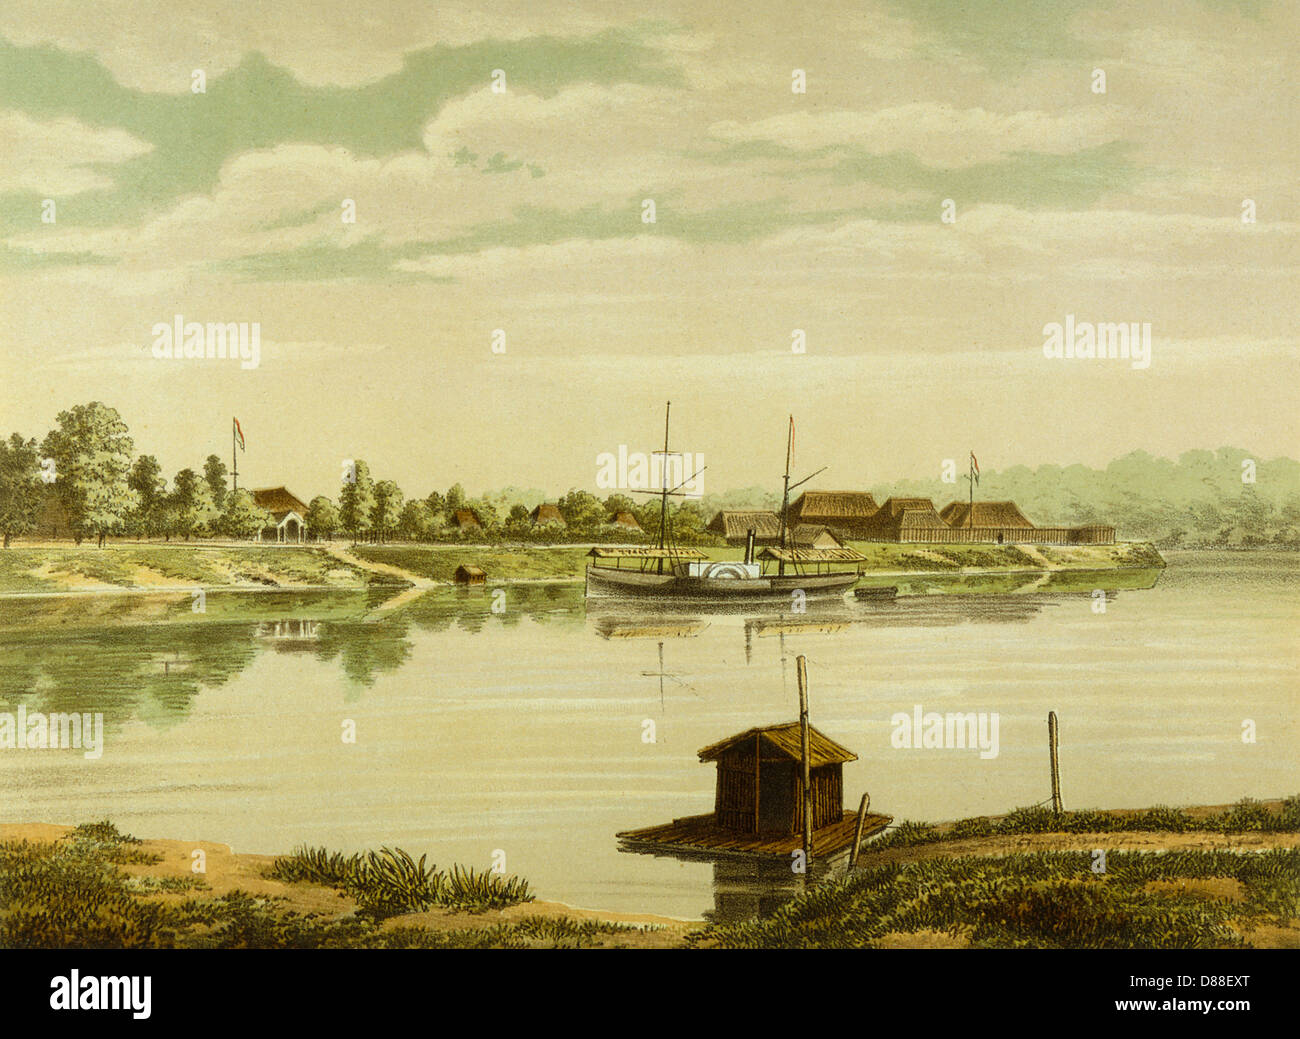 BORNEO/SINTANG 1883 Stockfoto